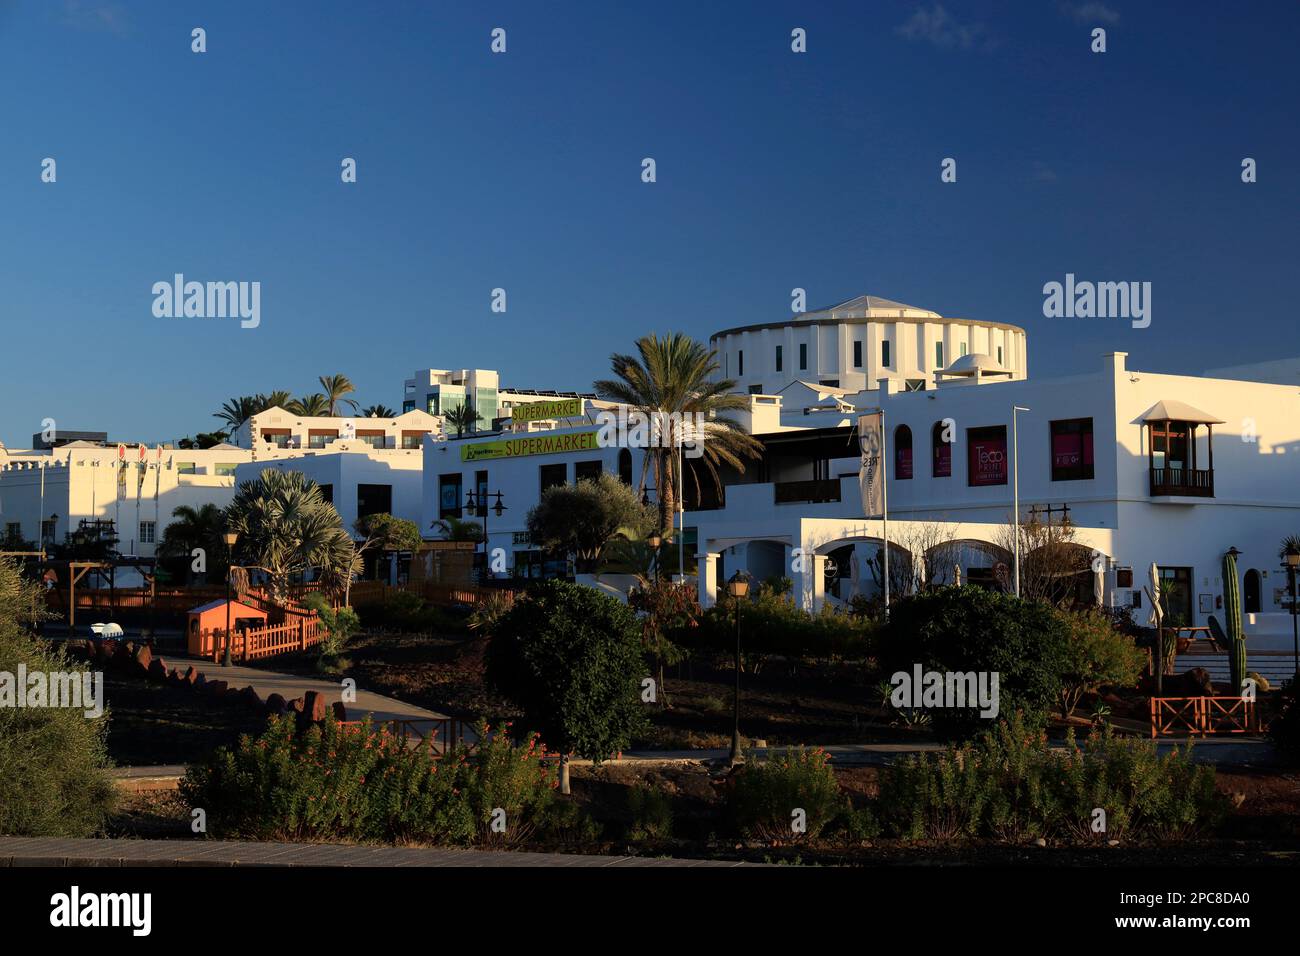 El Pueblo-Einkaufszentrum, Las Coloradas, Playa Blanca, Lanzarote, Kanarische Inseln, Spanien. Stockfoto